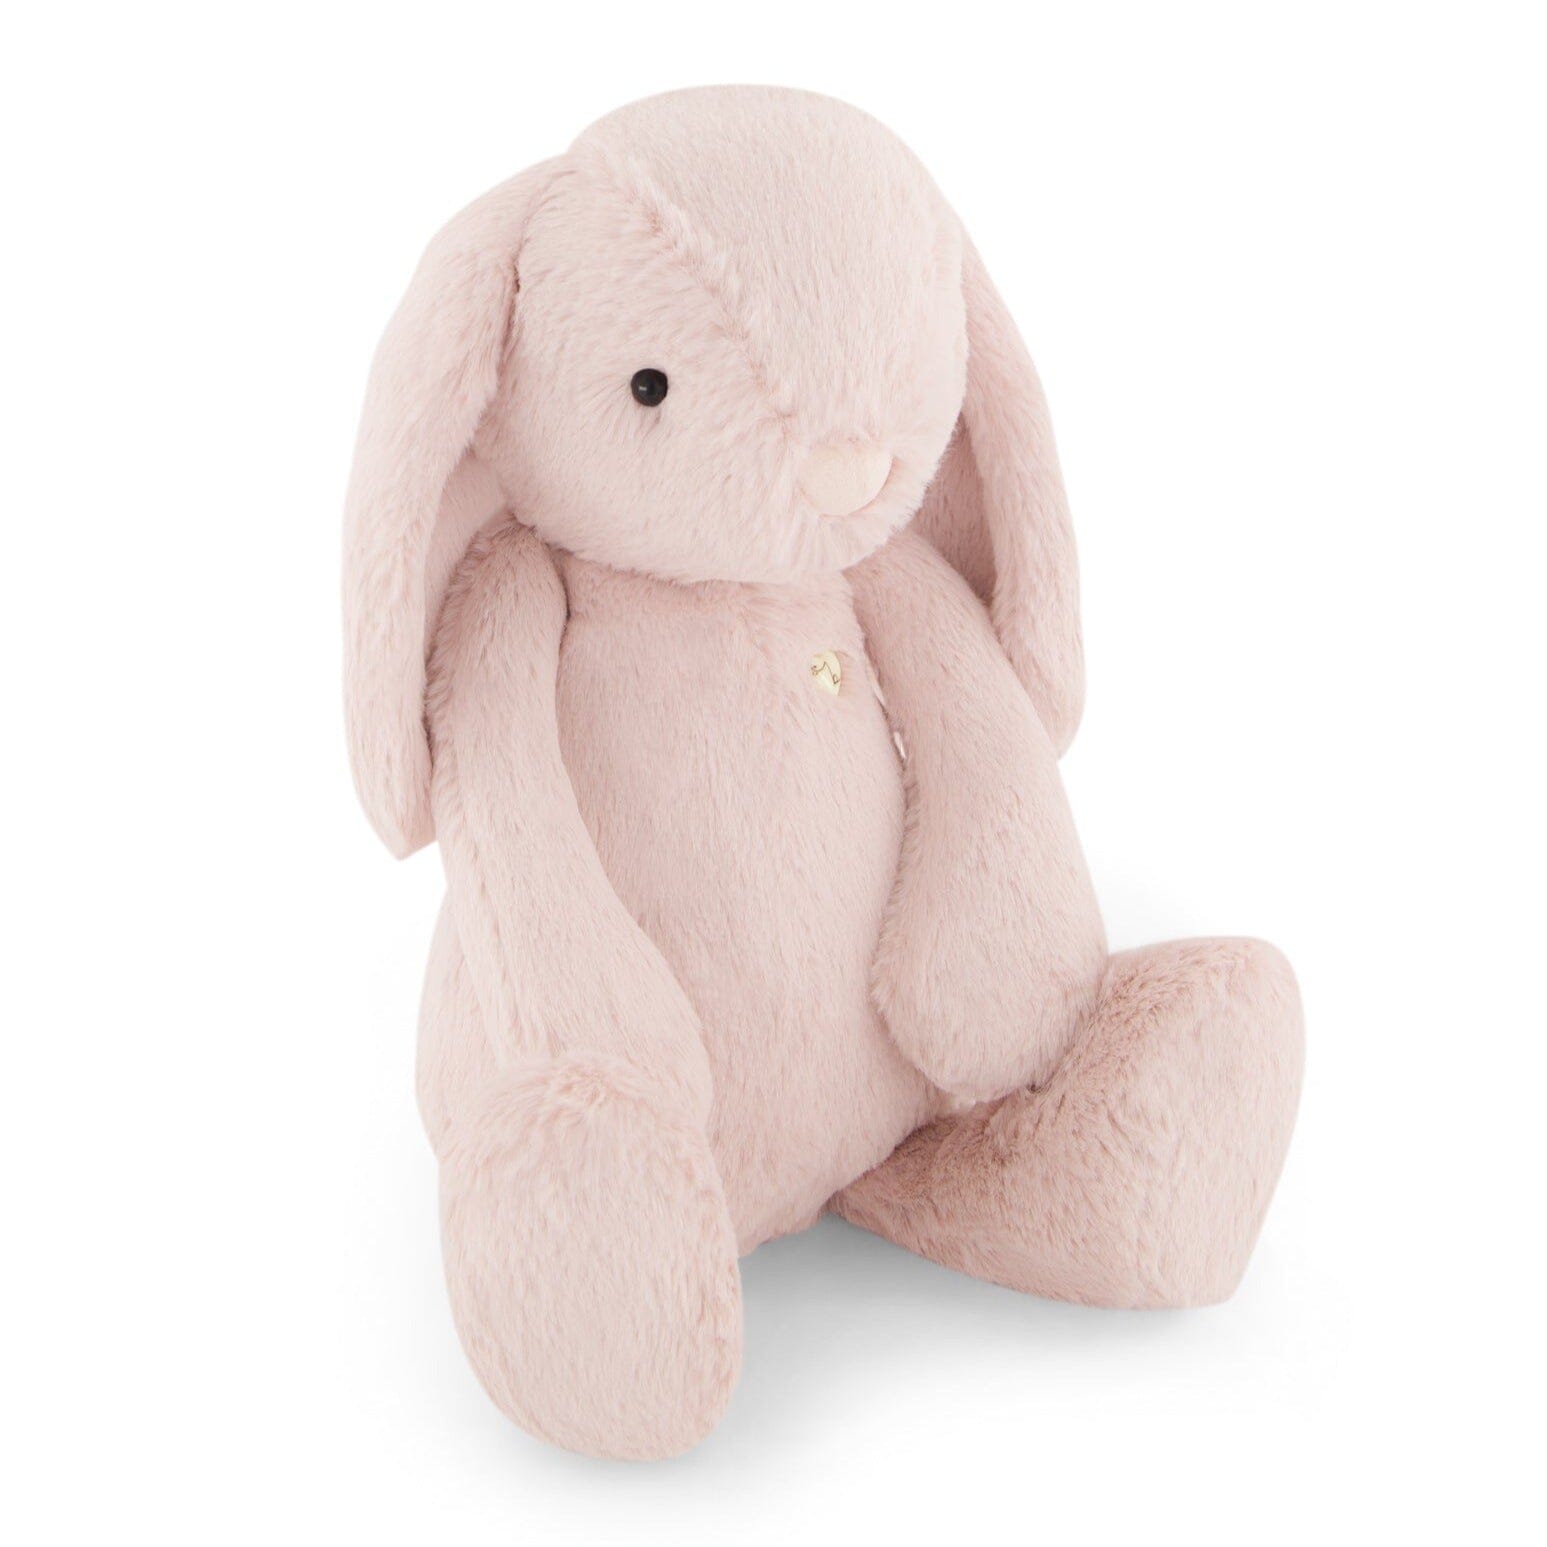 Penelope The Bunny - Snuggle Bunnies - Blush